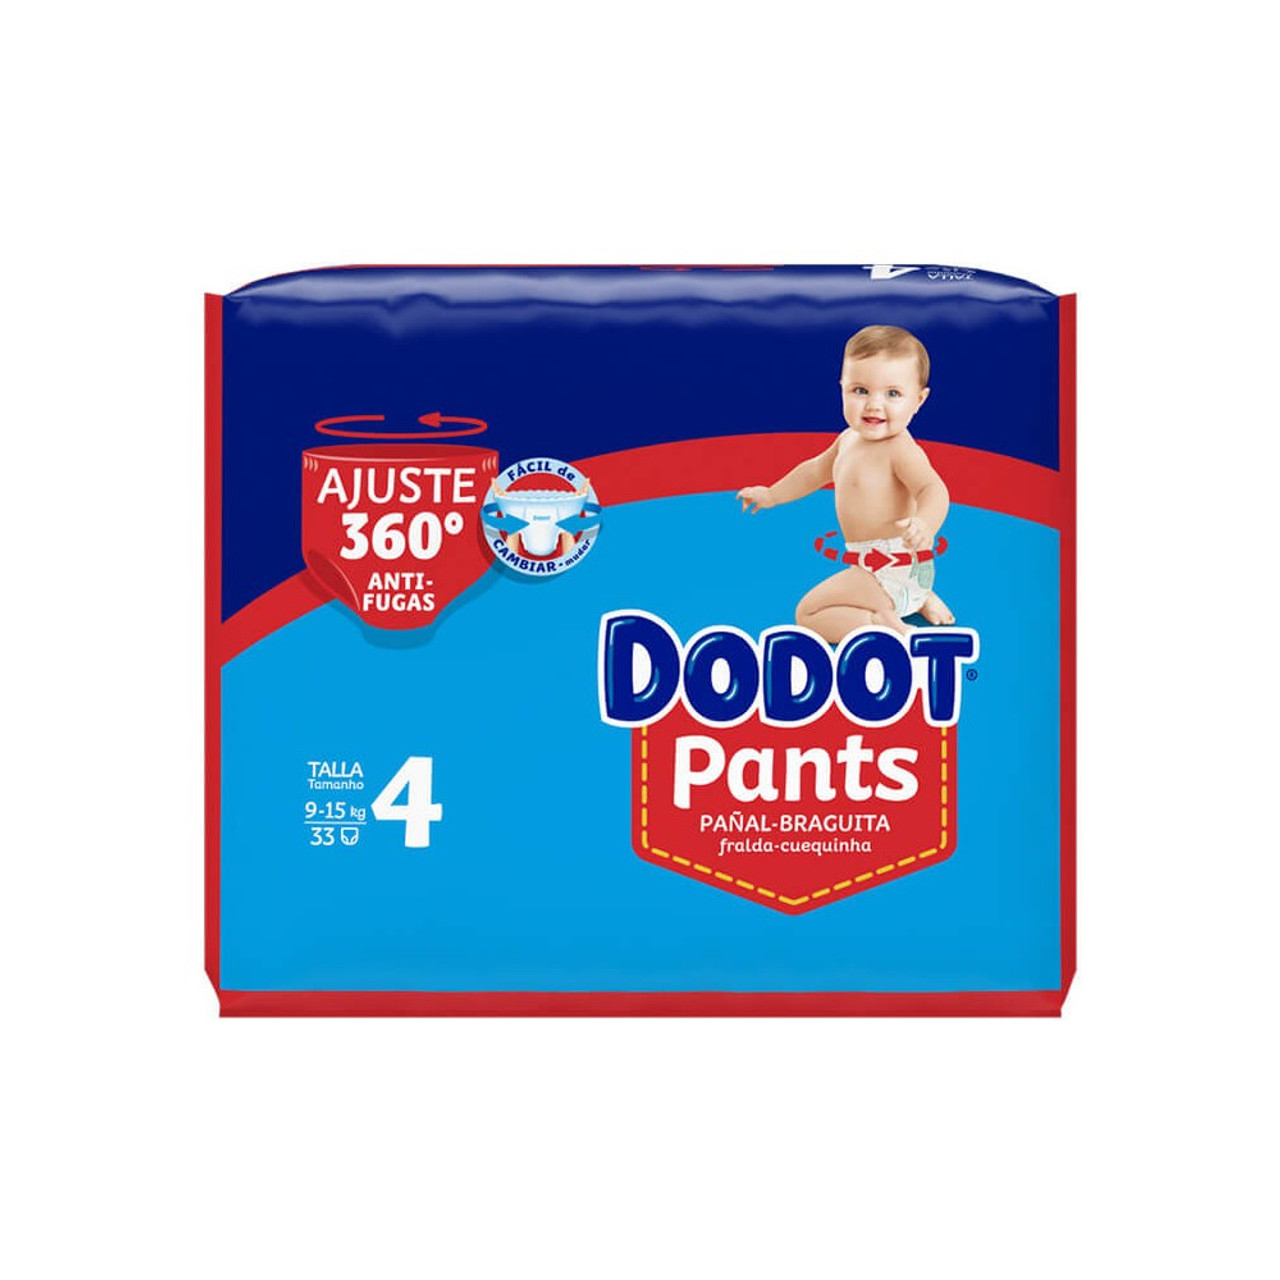 Dodot Activity Extra Size 4 45 Units Diaper Pants